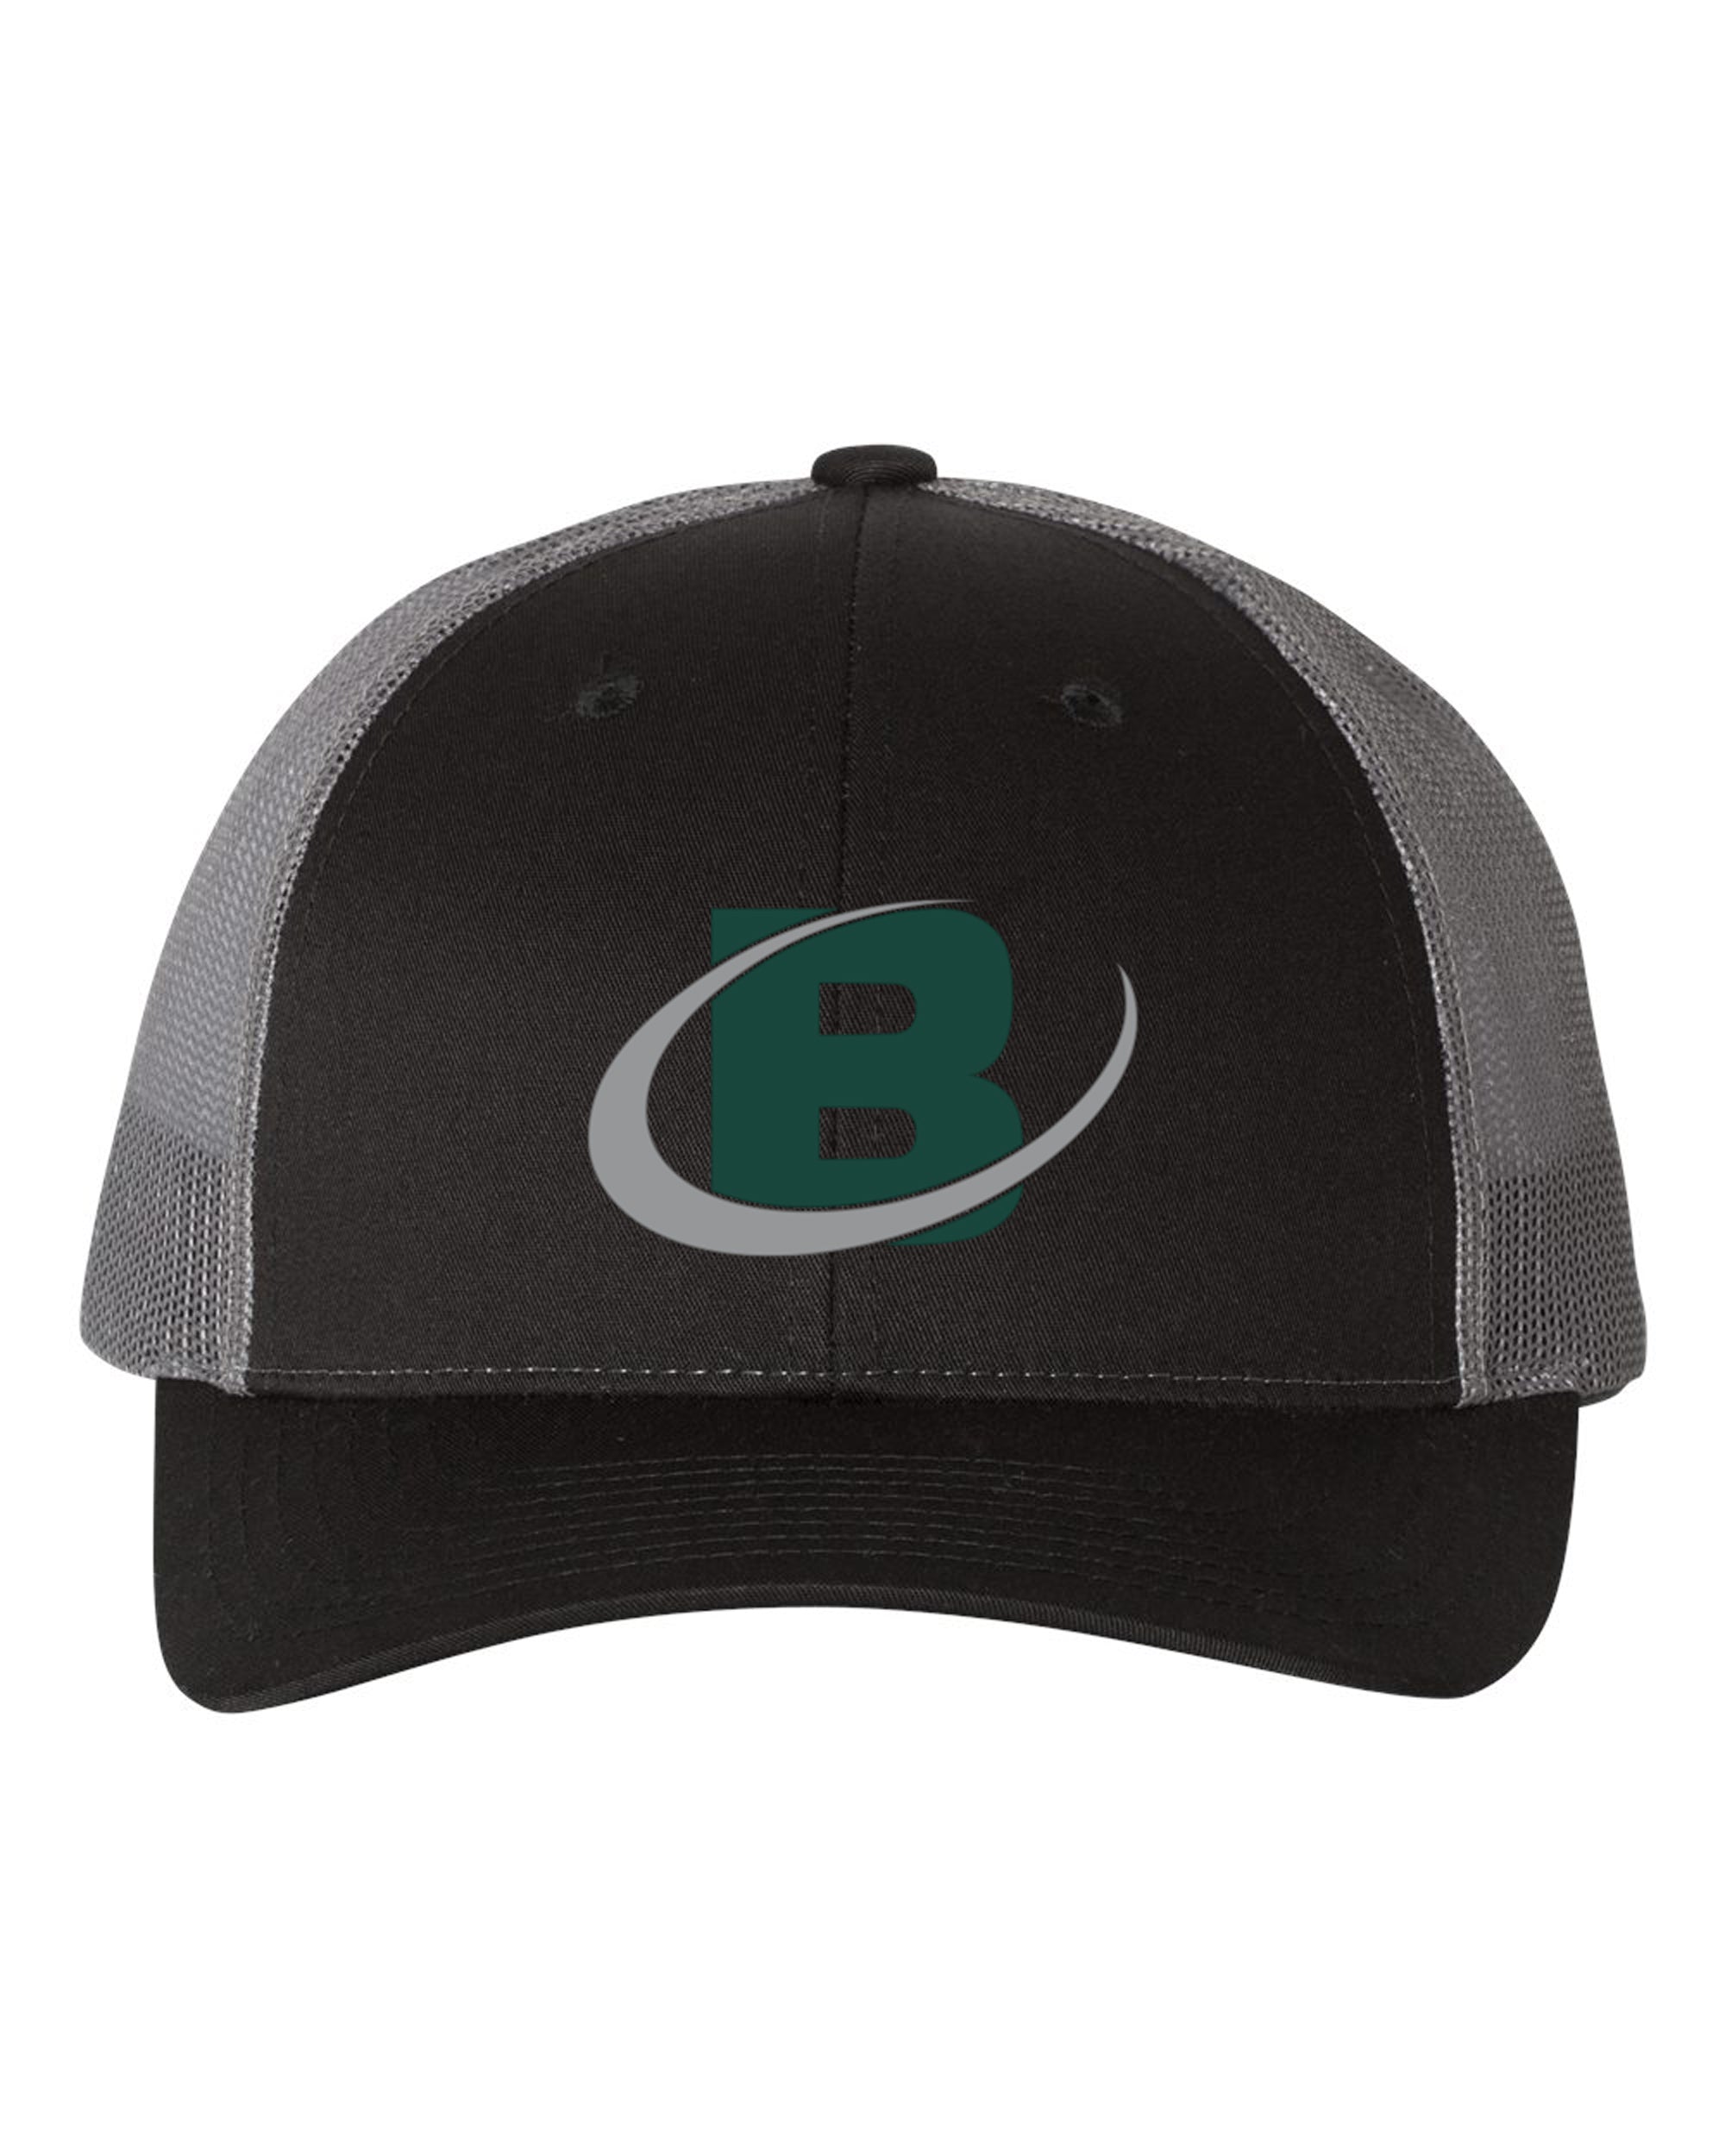 Bowman Turfgrass Professionals - Structured Hat